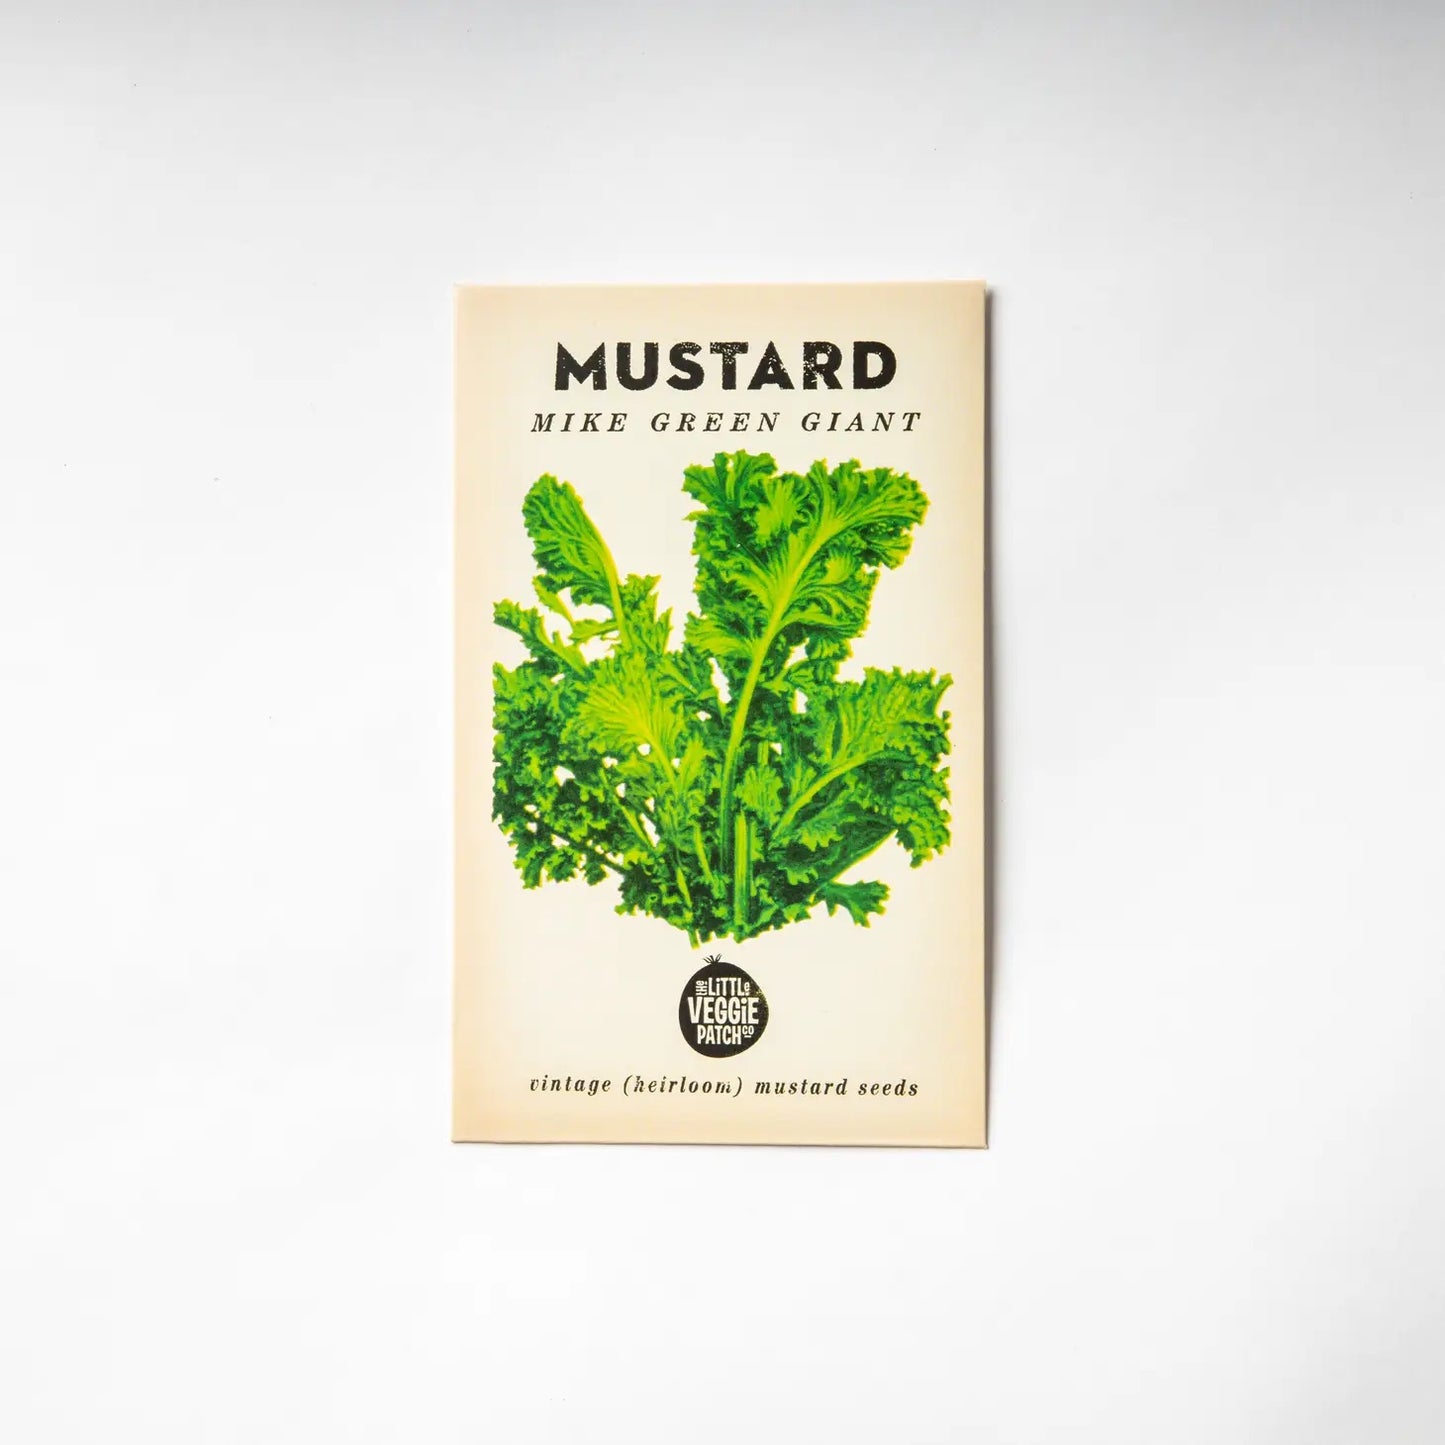 Mustard "Mike Green Giant" Heirloom Seeds